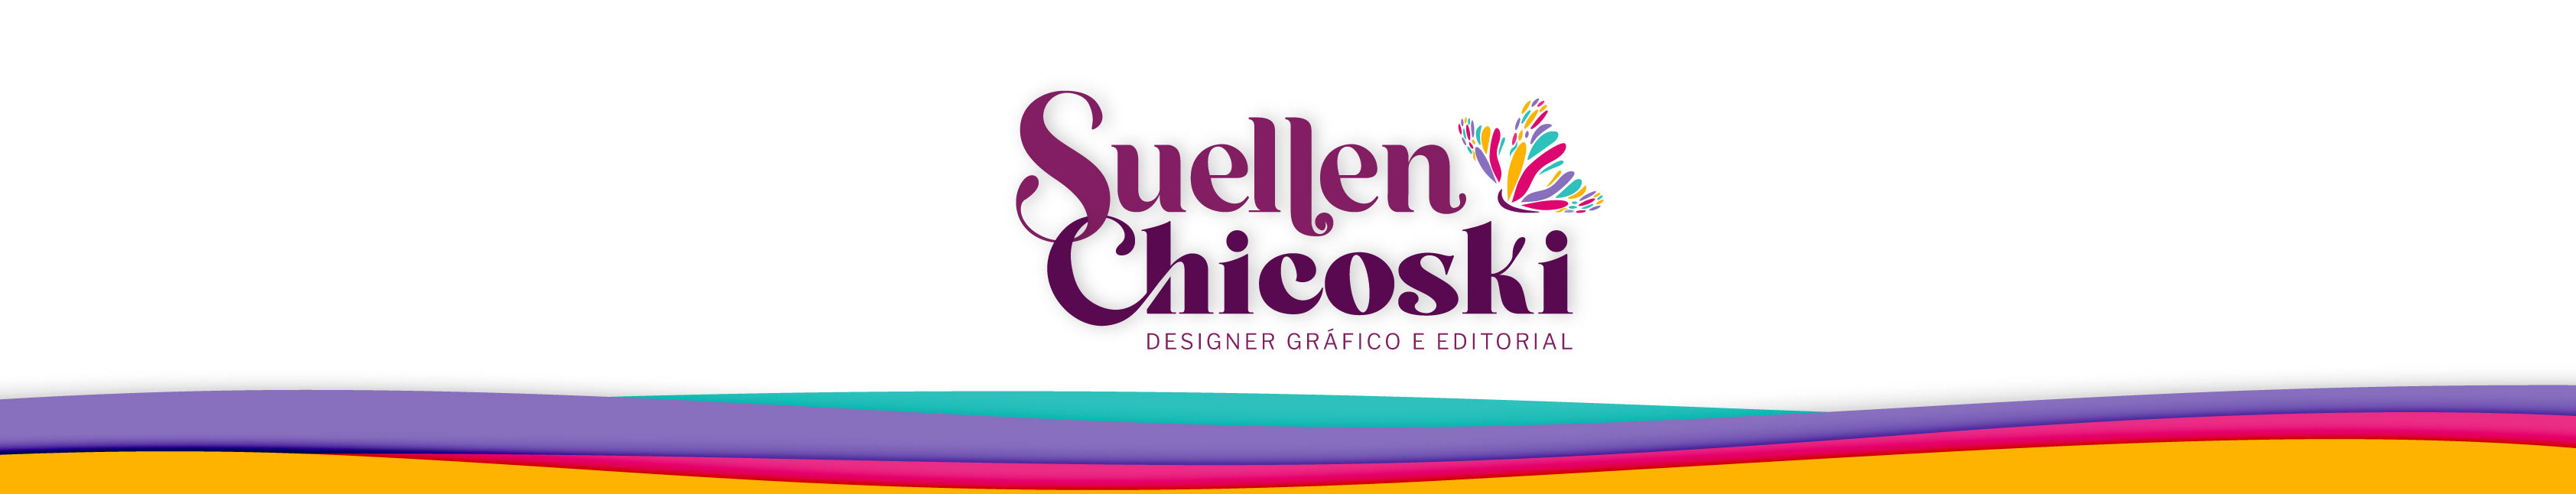 Suellen Chicoski do Prado's profile banner